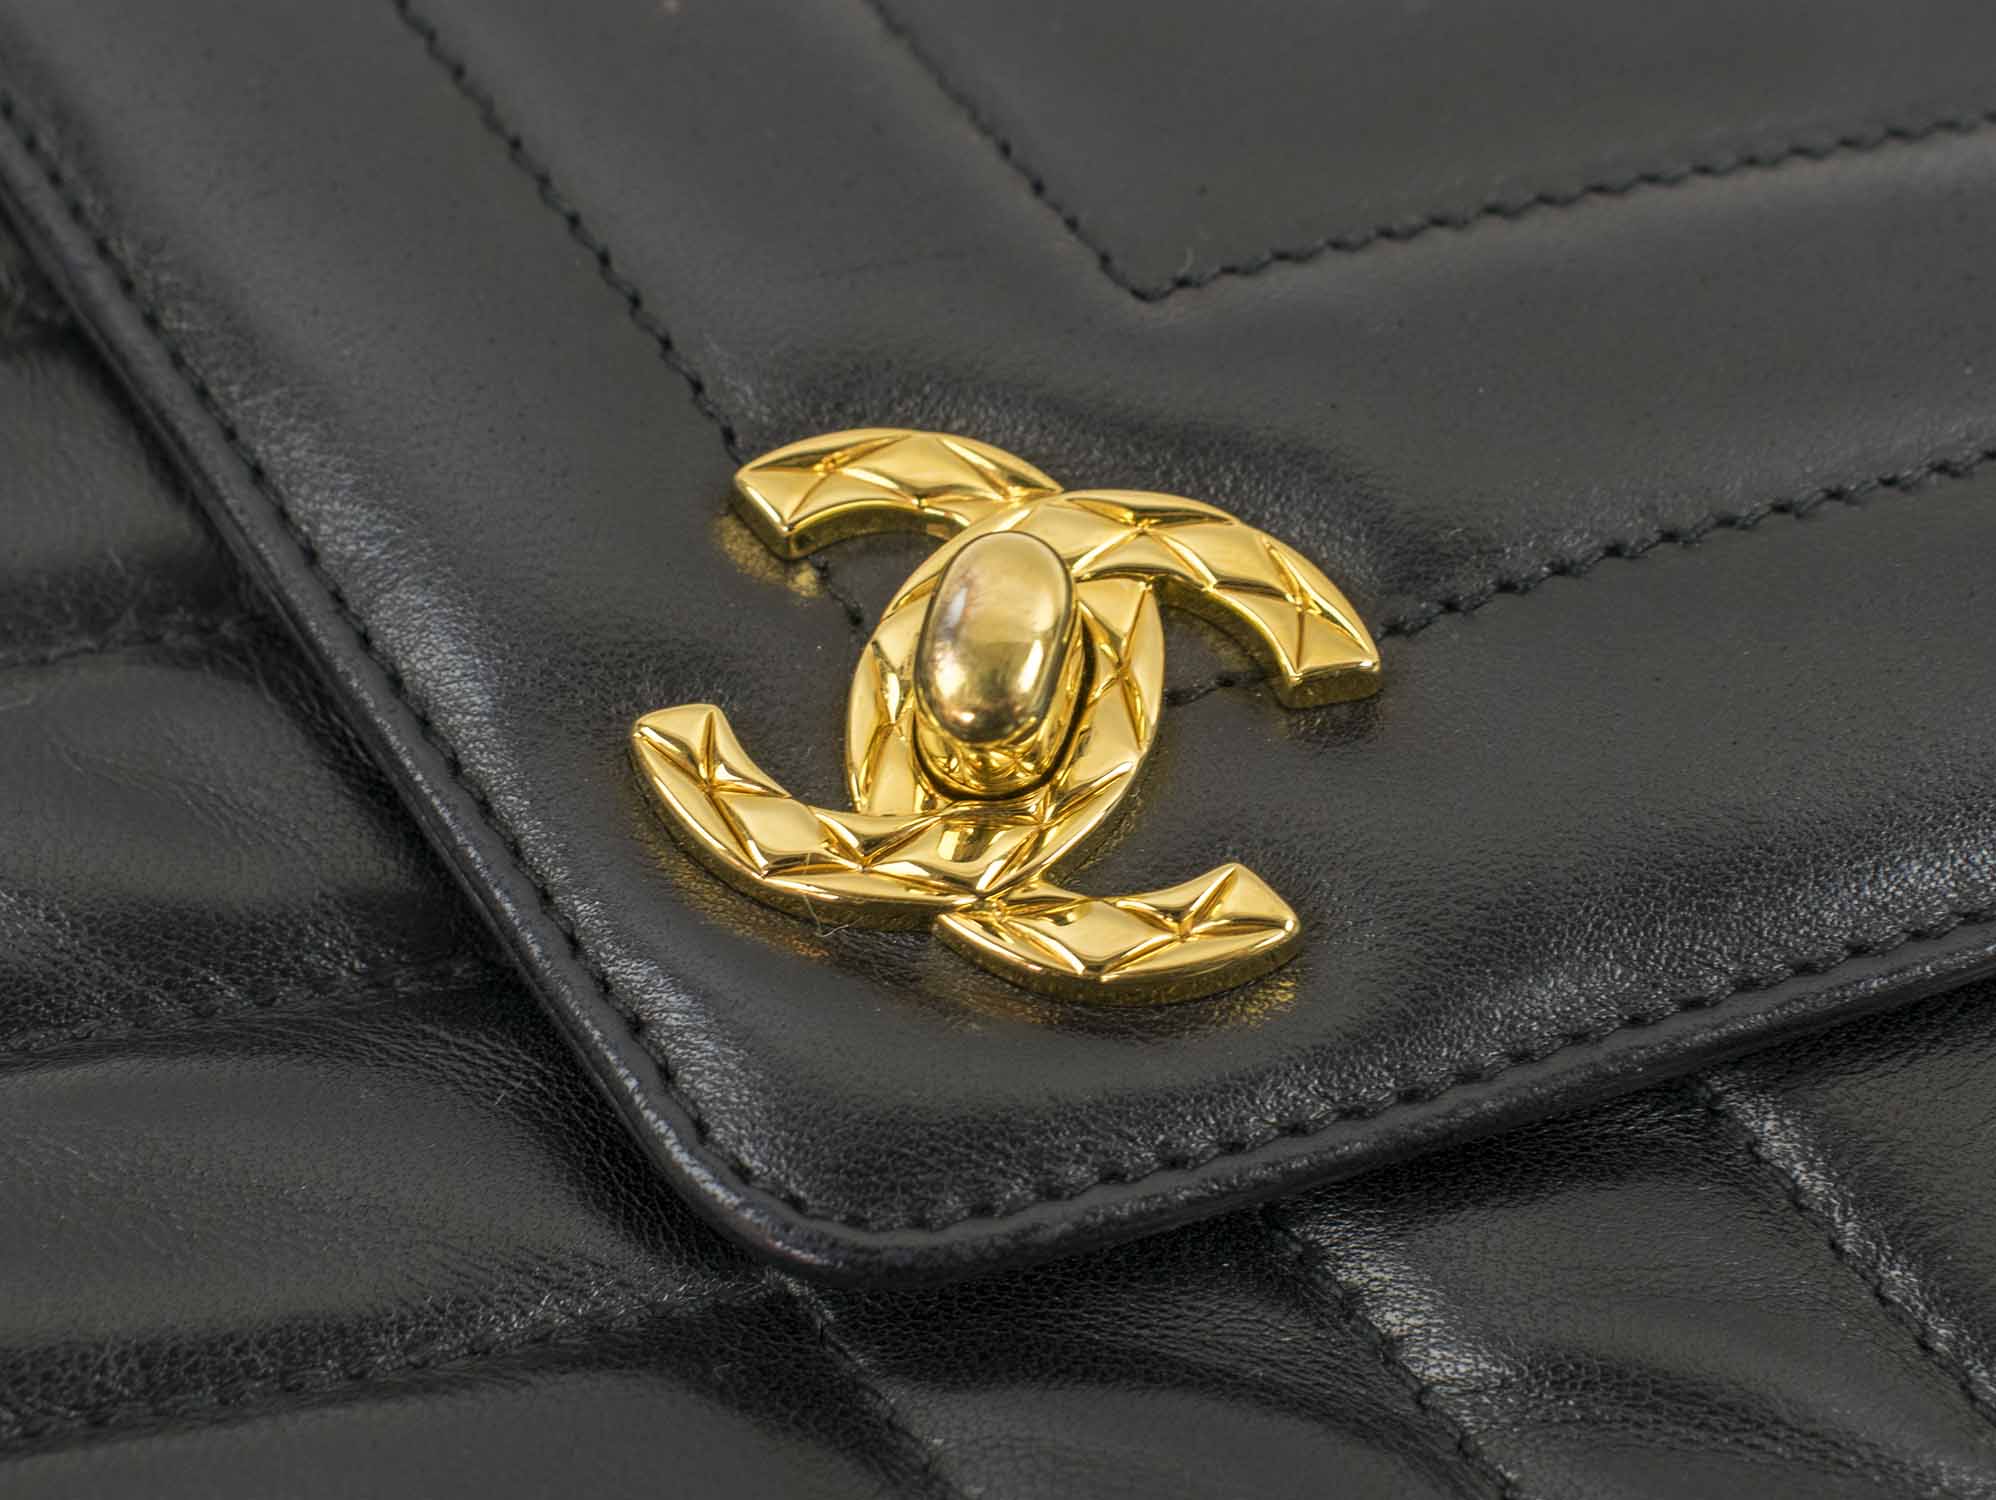 Chanel Vintage Caviar Leather Chevron Top Handle Speedy Bag at 1stDibs